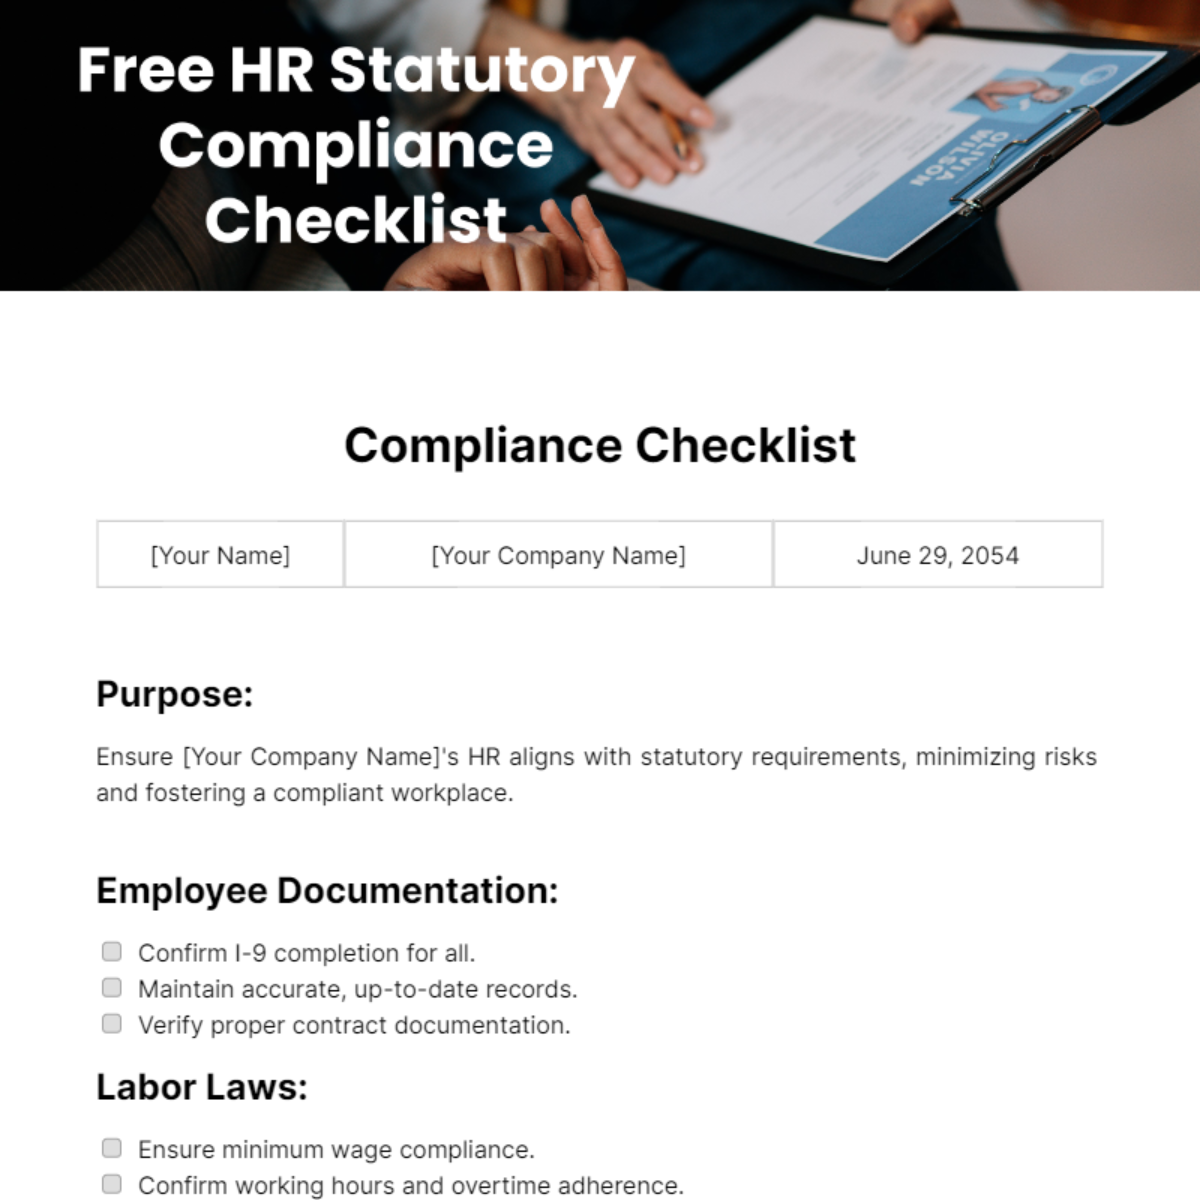 HR Statutory Compliance Checklist Template